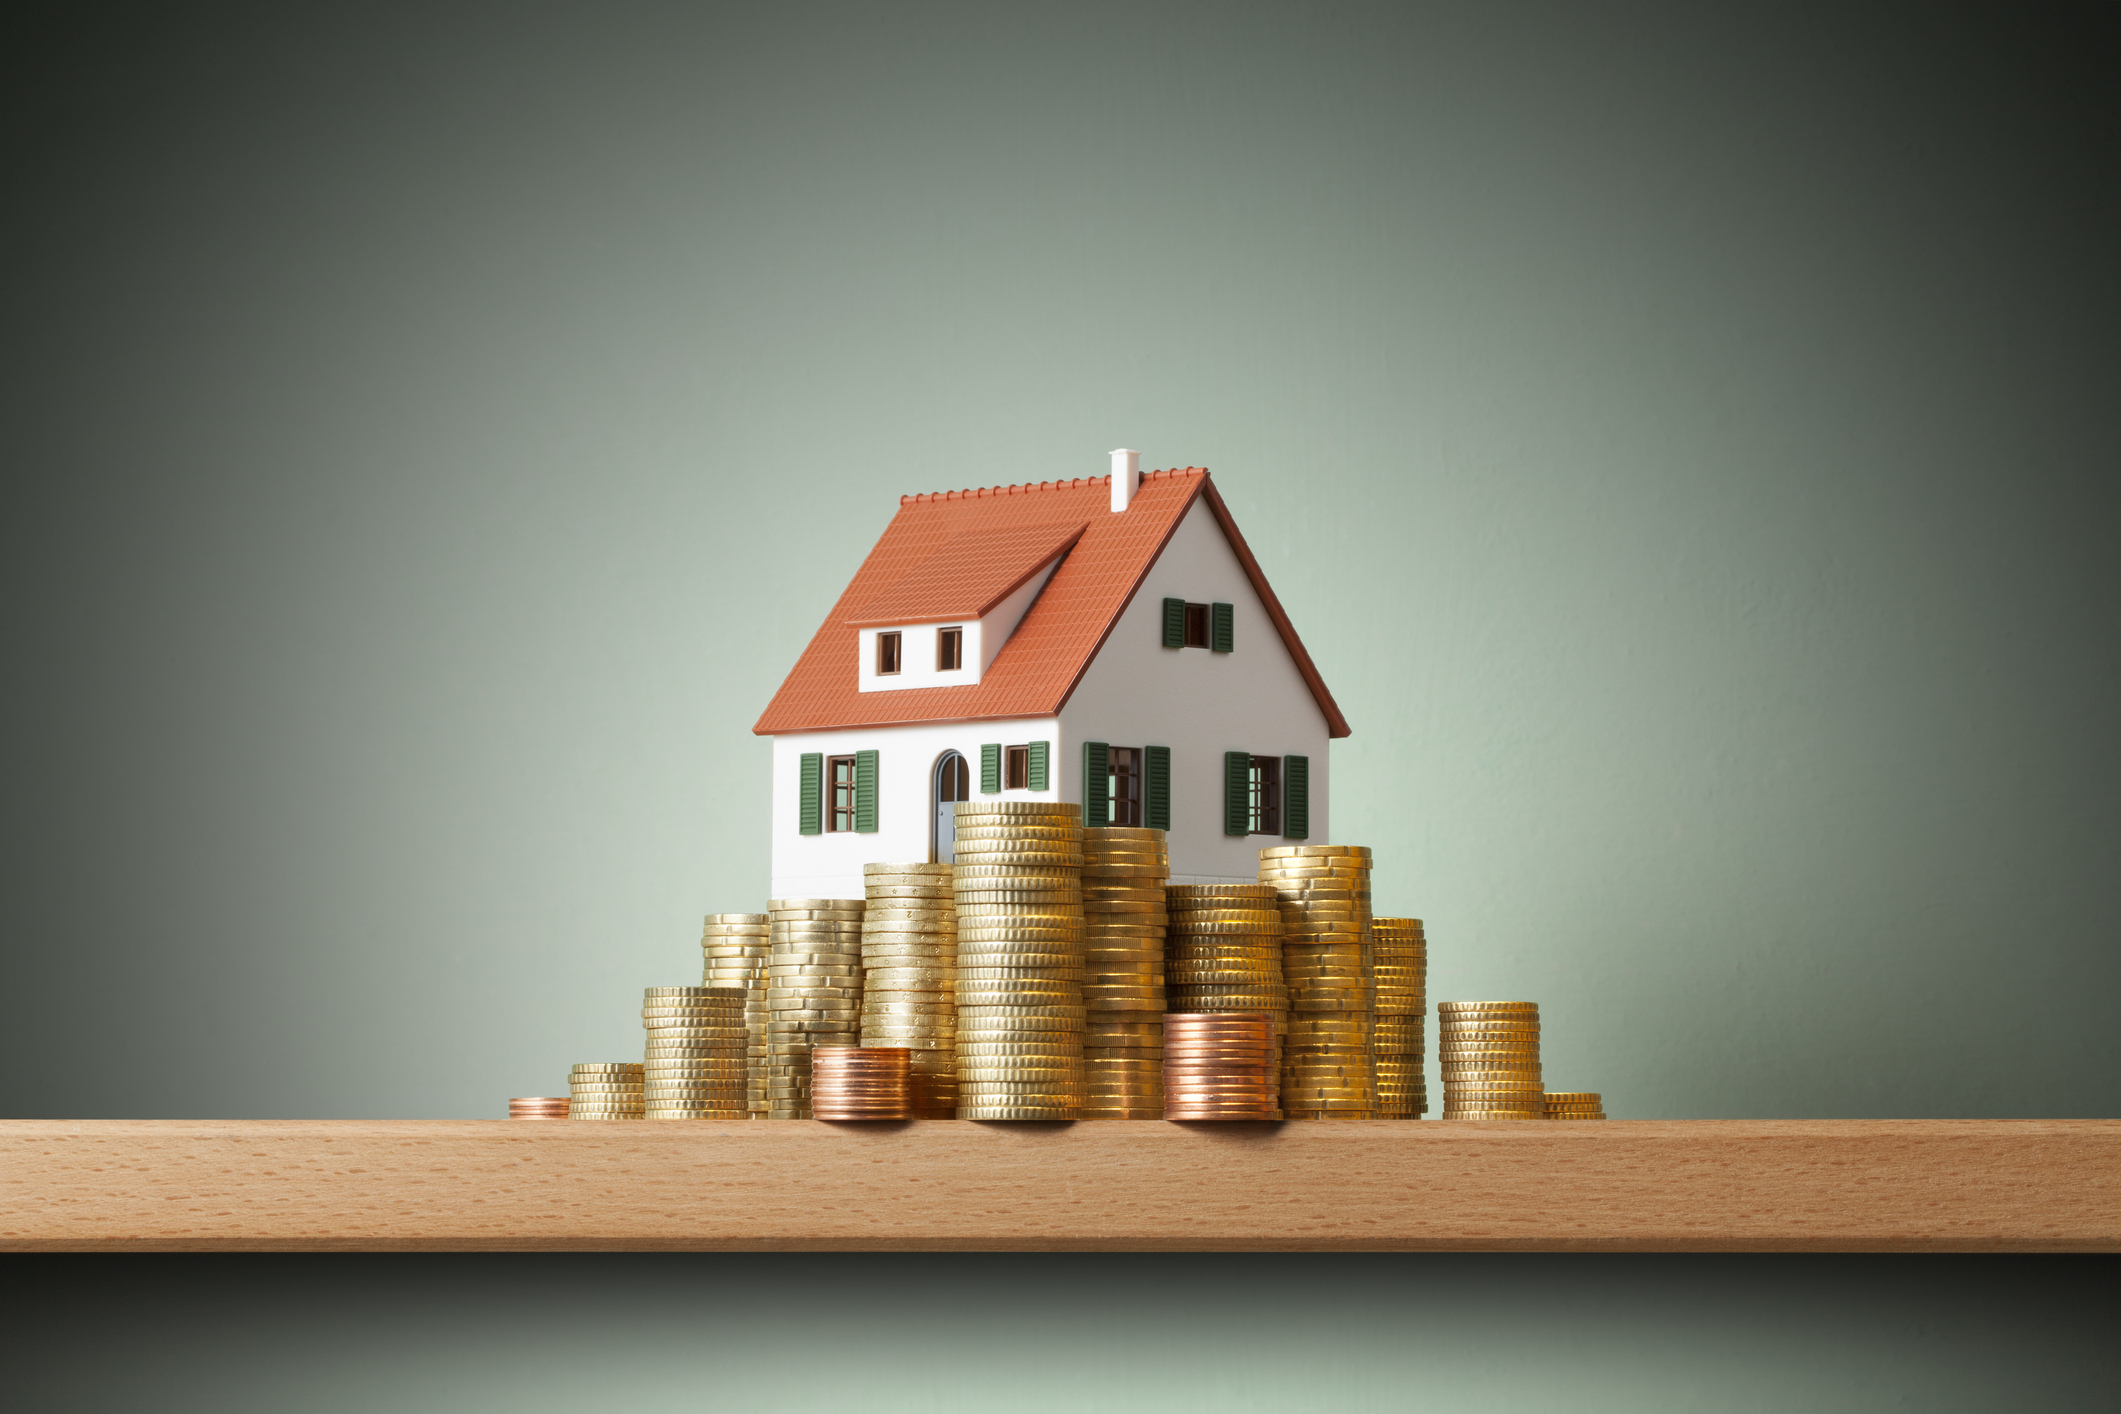 Bad Credit Home Equity Loan